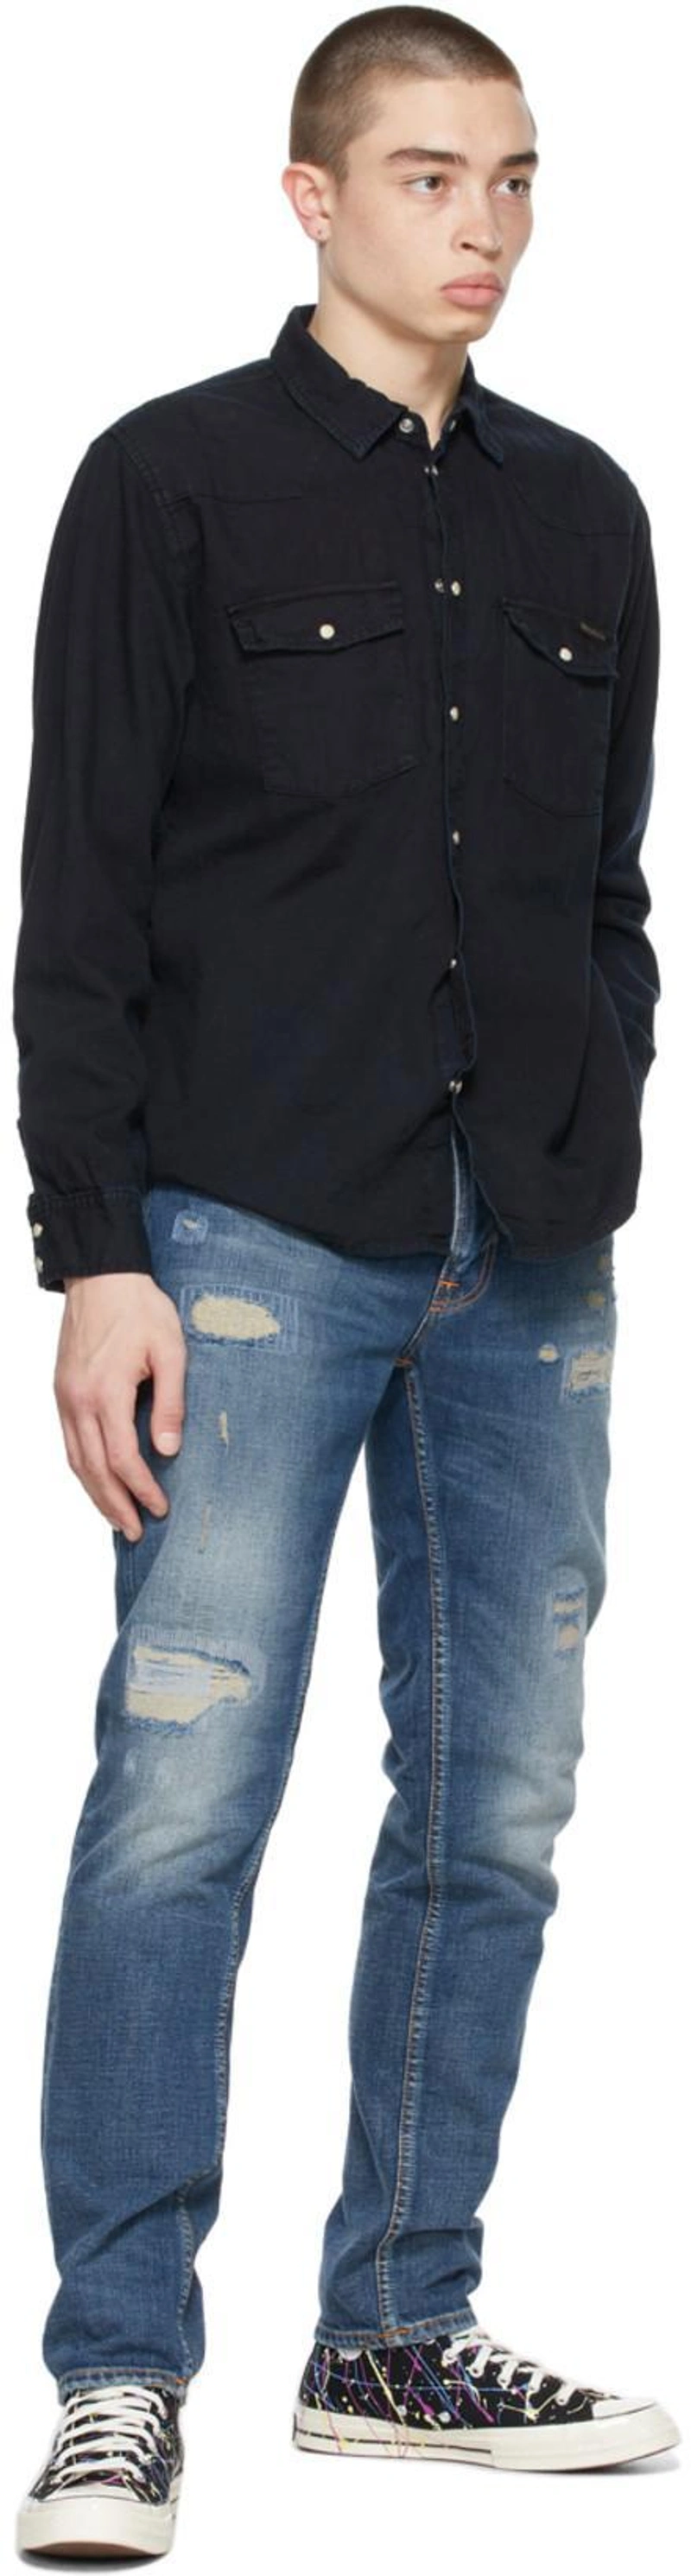 SSENSE's Post | Wearing: Nudie Jeans Black Denim Organic George Shirt In Navy; Nudie Jeans Blue Gritty Jackson Jeans In Indigo Gala; Converse Chuck 70 Archive Paint Splatter Print High-top Sneakers In Black